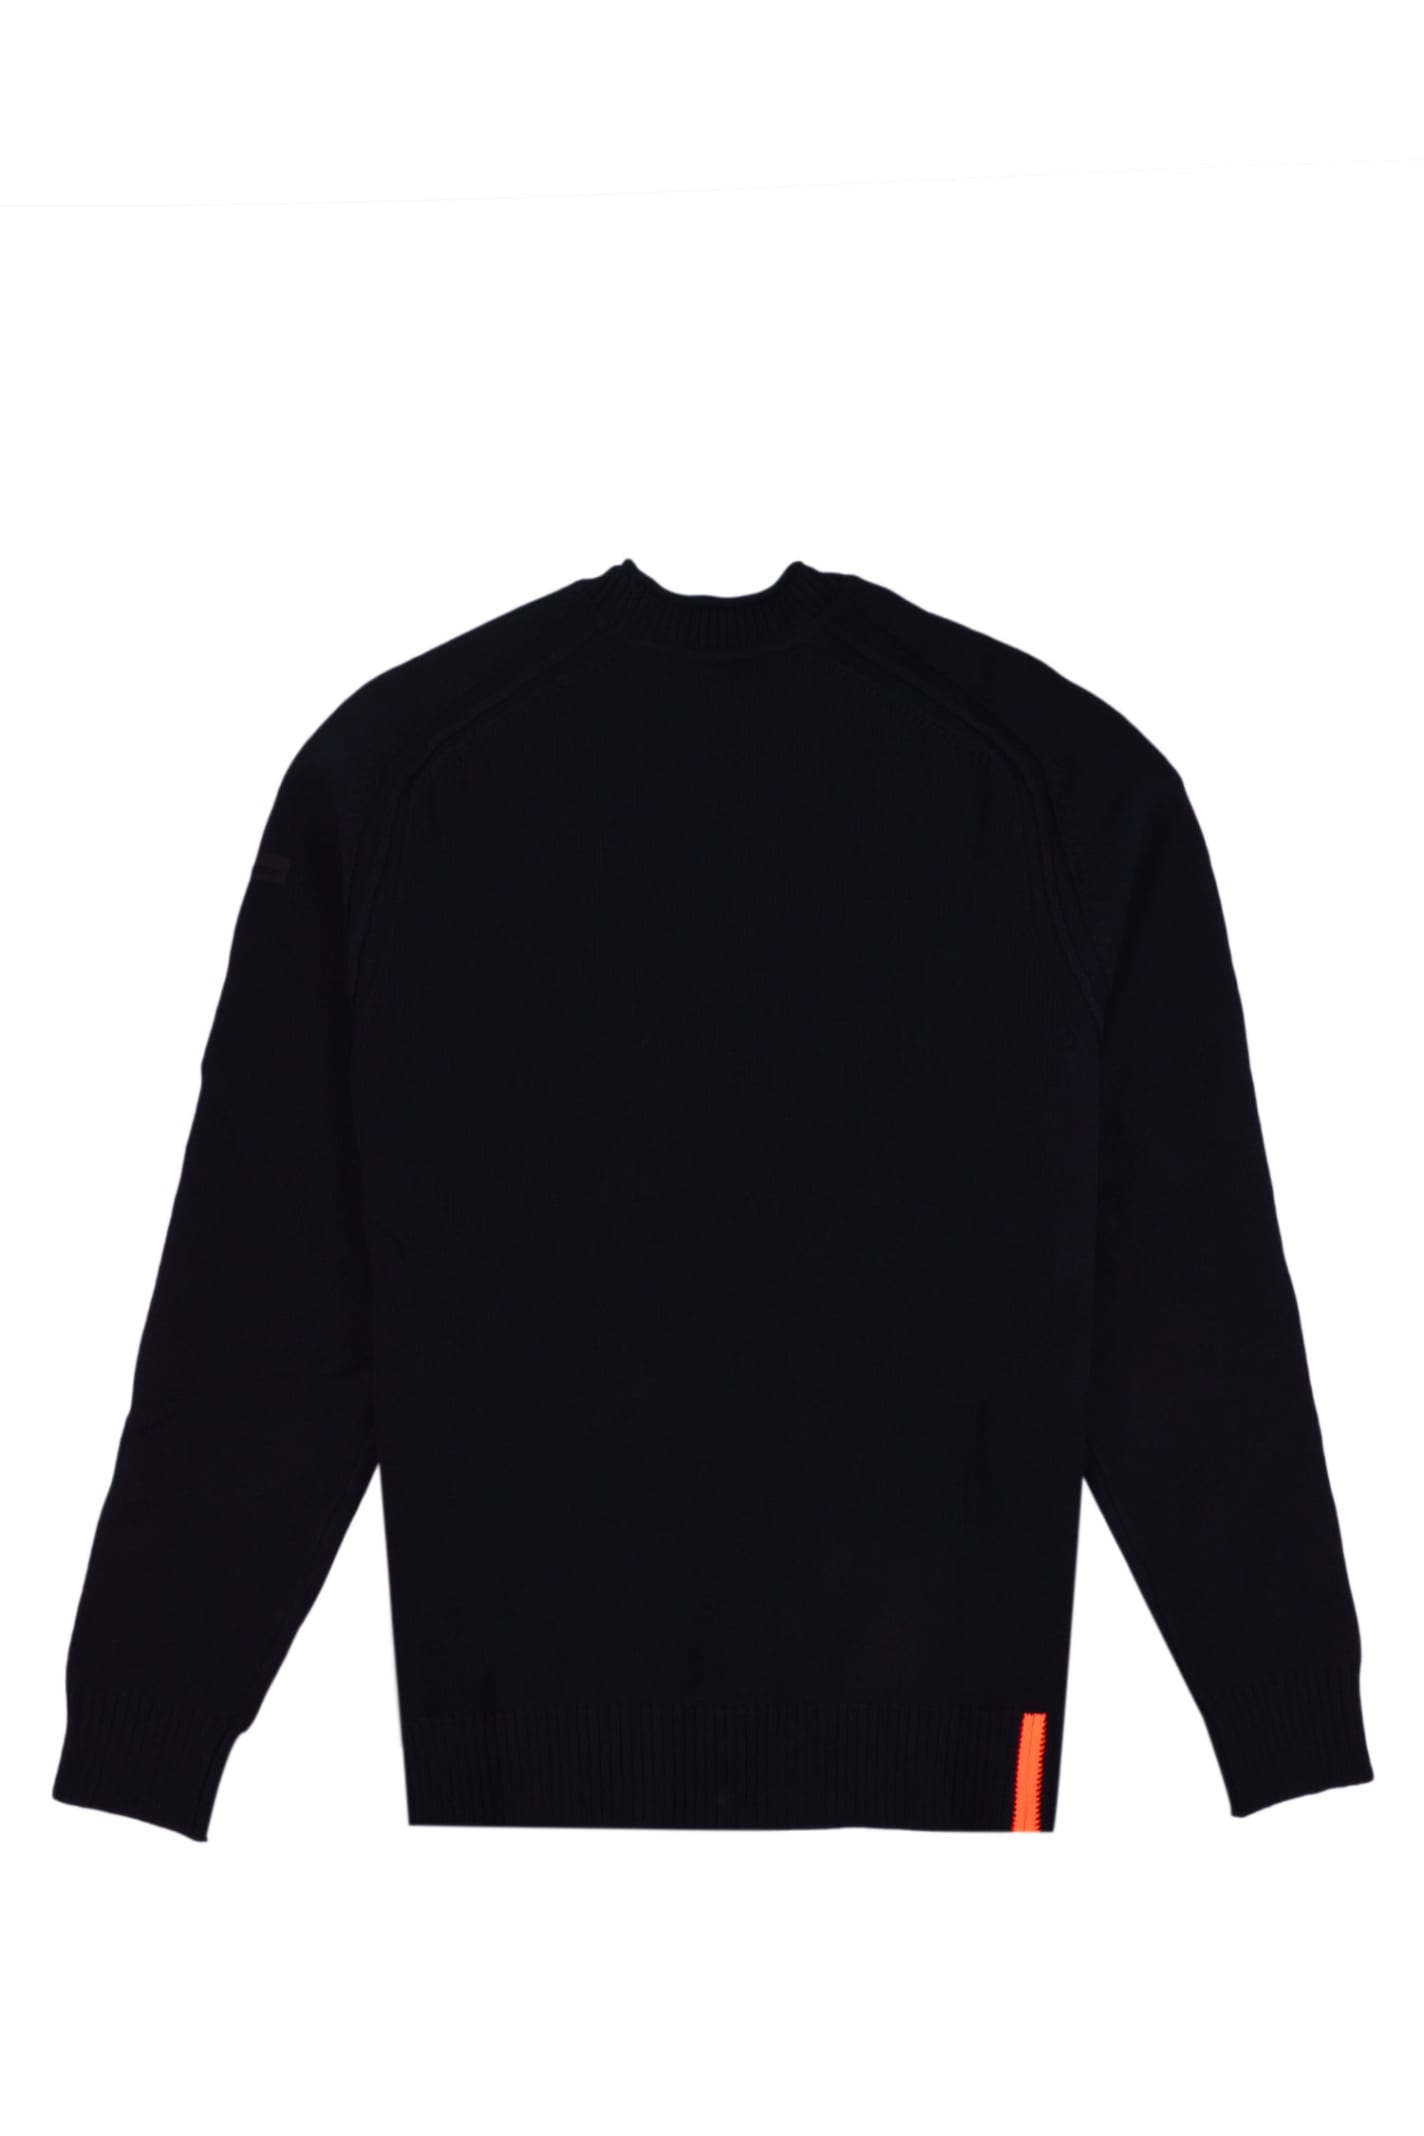 Shop Rrd - Roberto Ricci Design Sweater